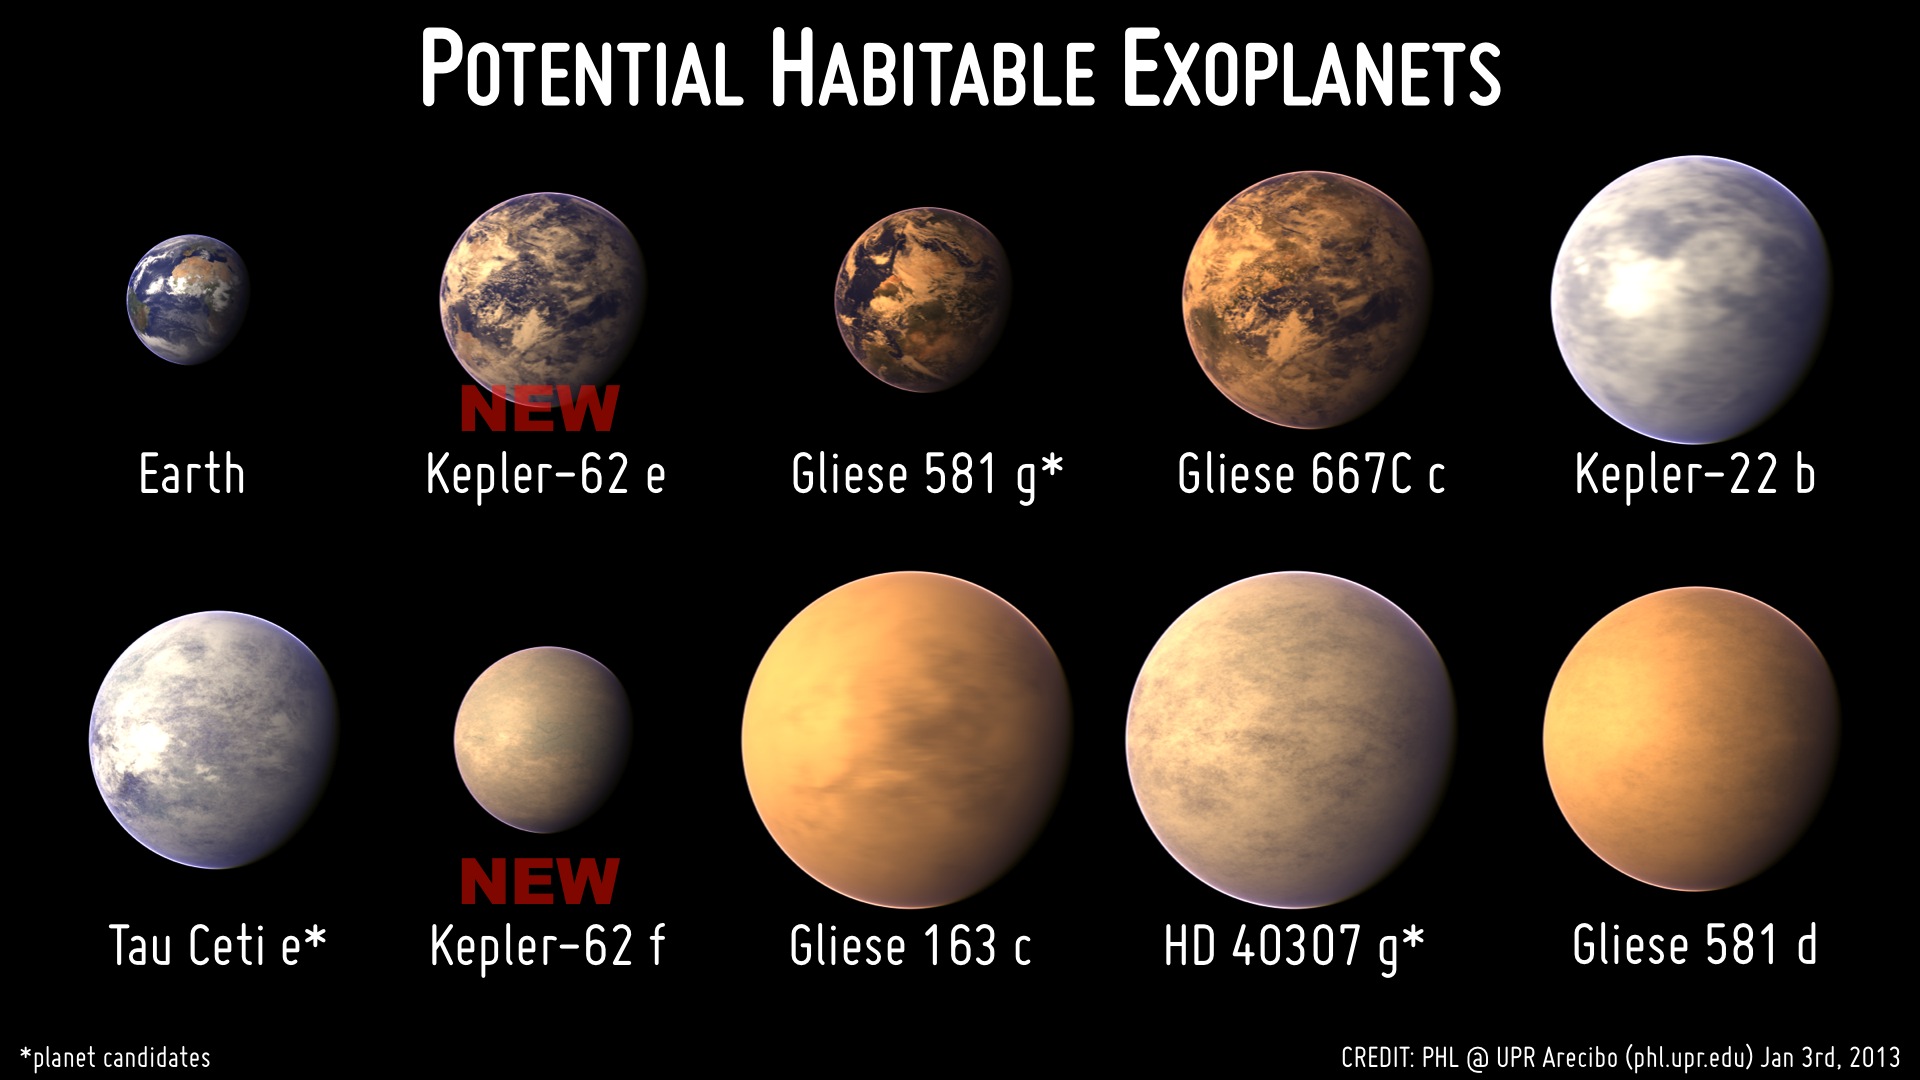 Habitable Worlds? New Kepler Systems in Images